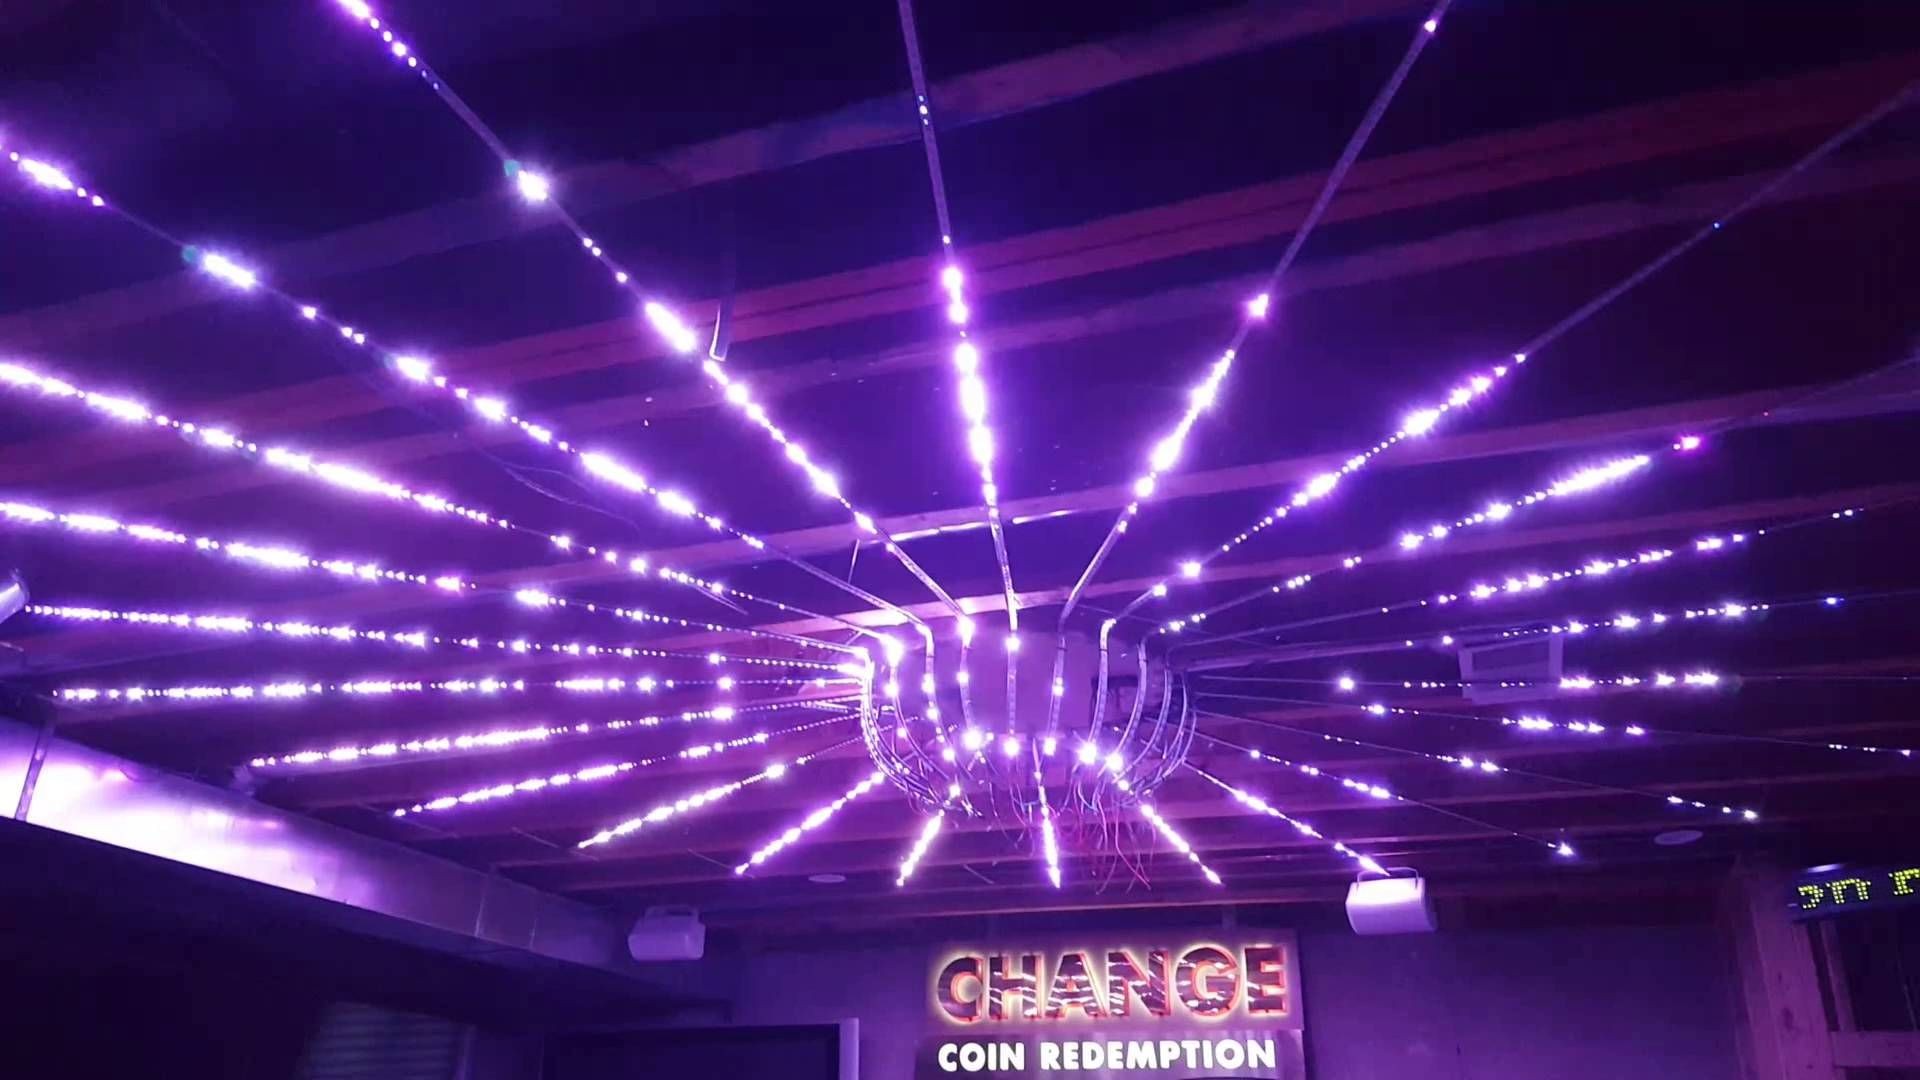 Ws2812b led ceiling installation Disco lights